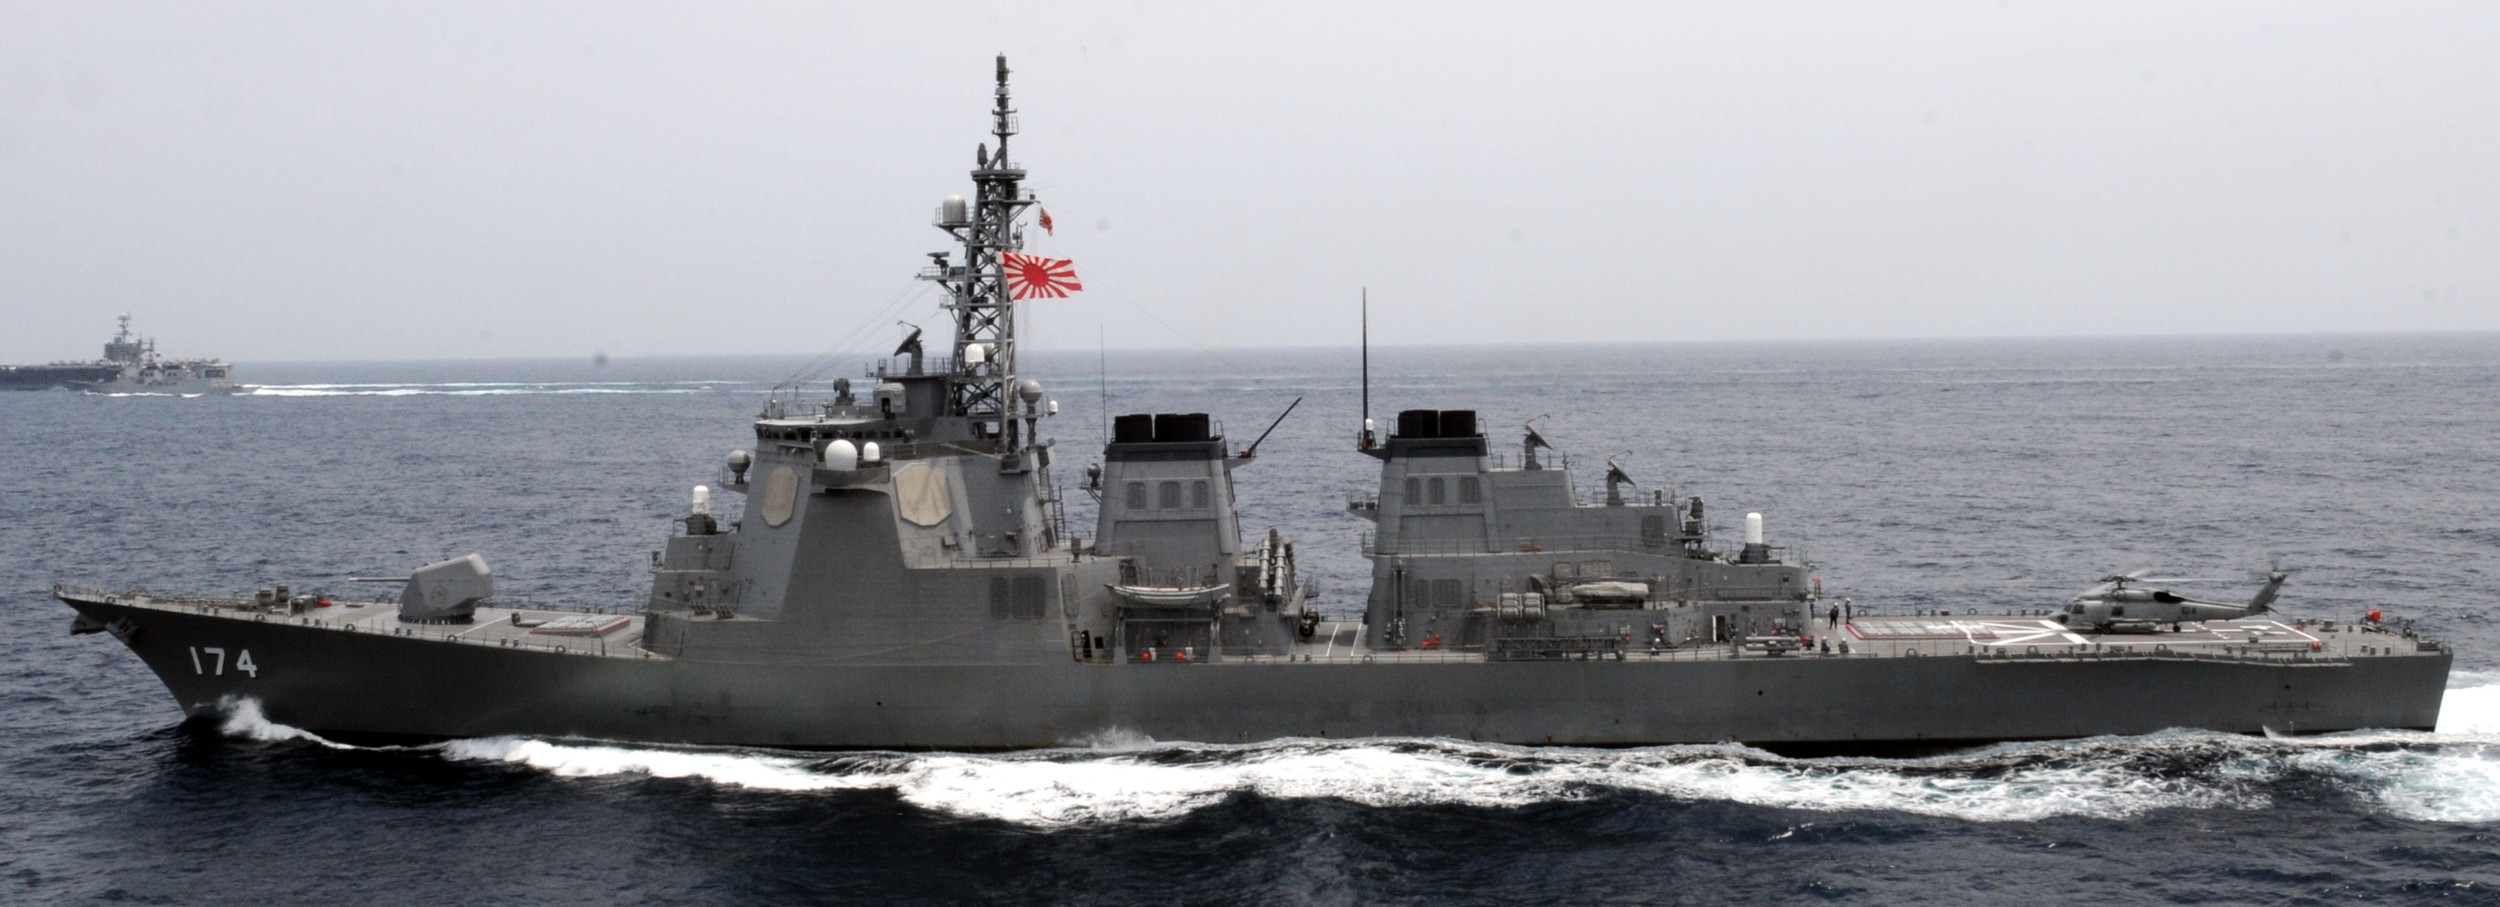 ddg-174 jds kirishima kongou class destroyer japan maritime self defense force jmsdf 17